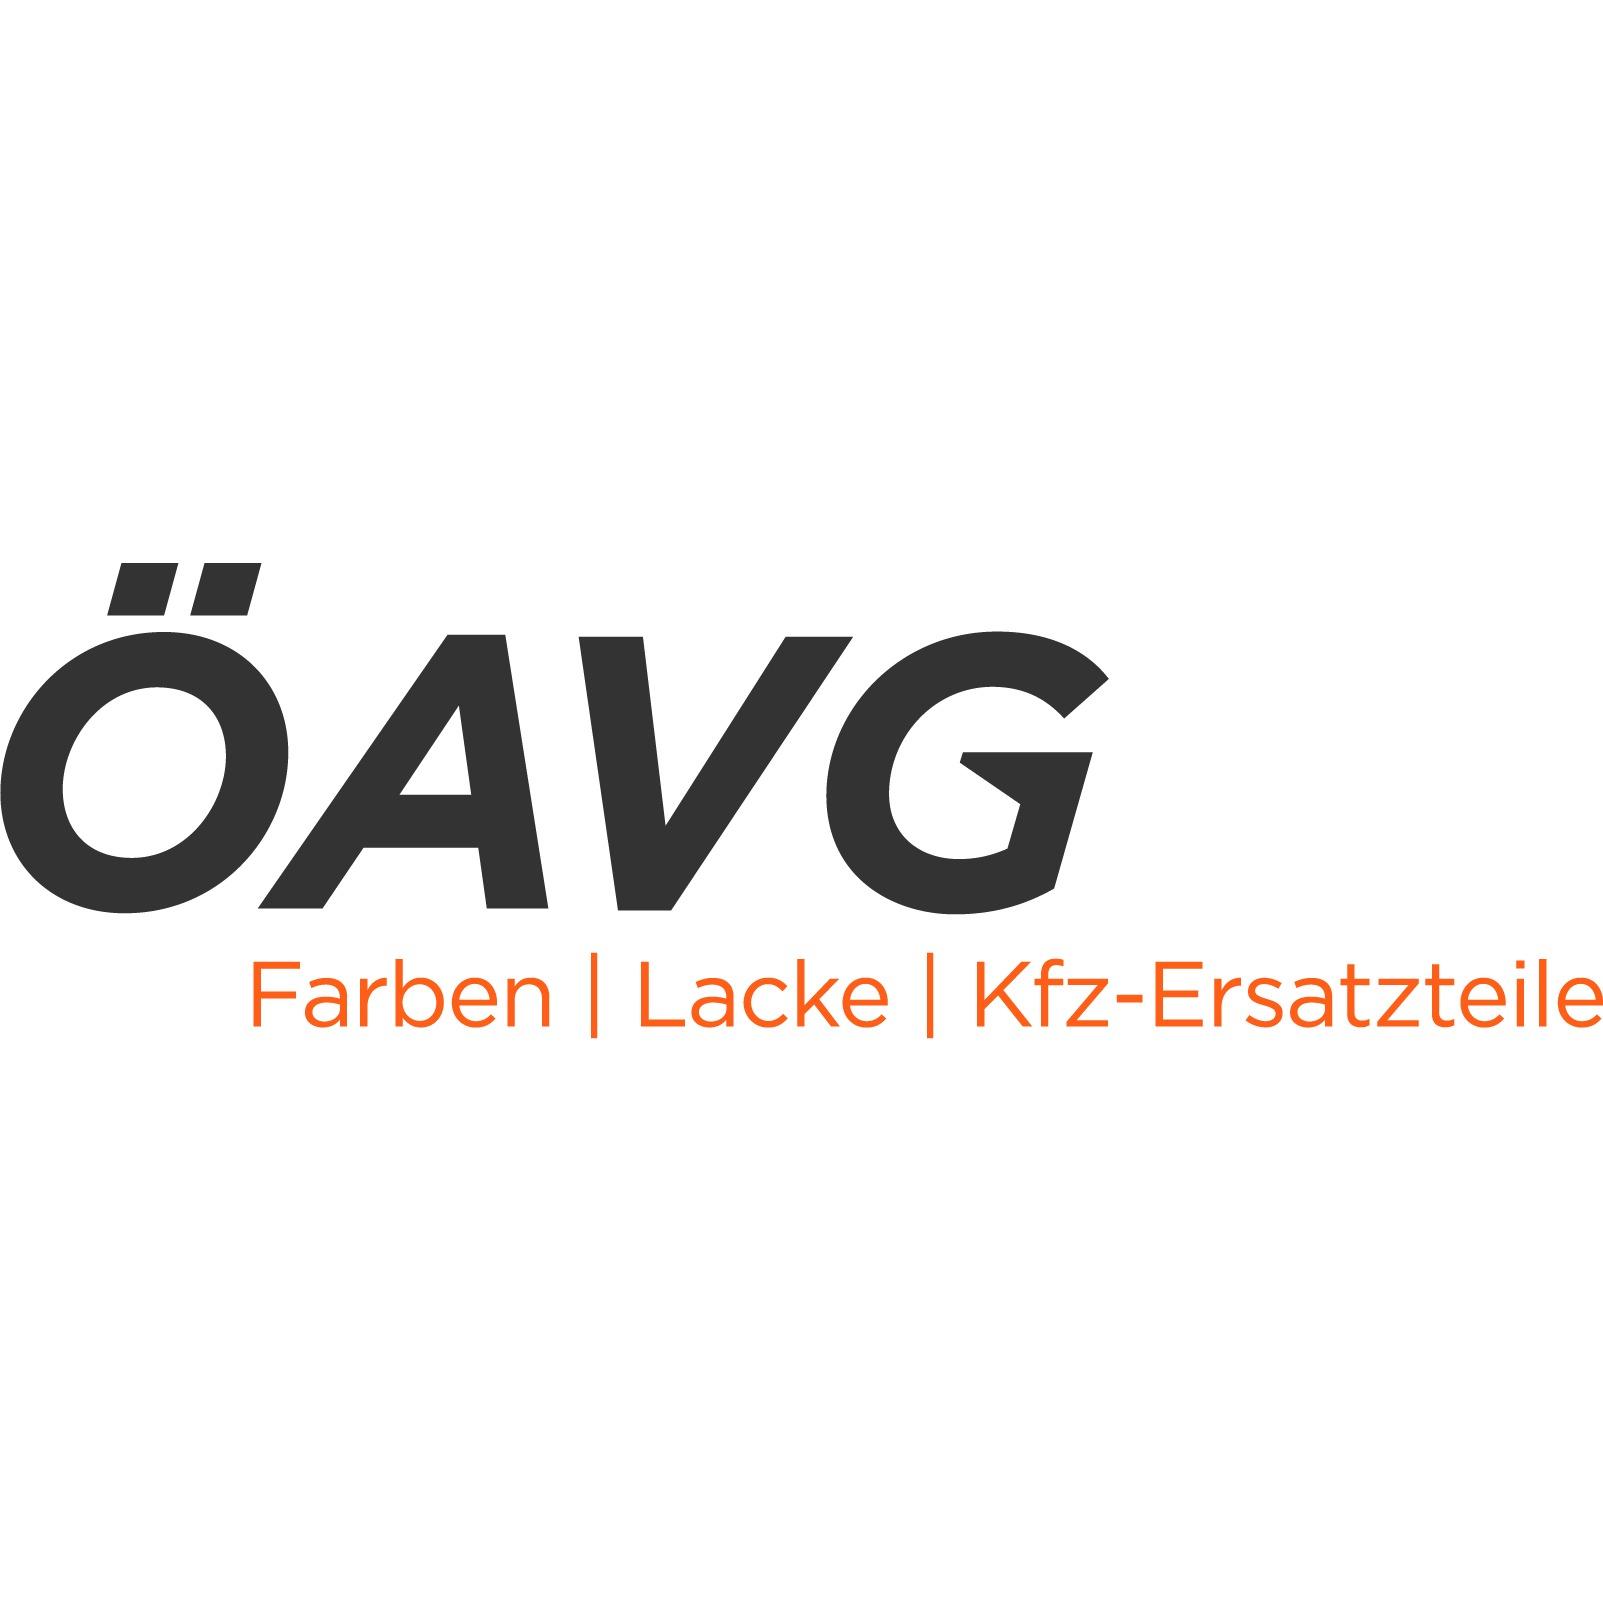 ÖAVG Farben | Lacke | Kfz-Ersatzteile Logo